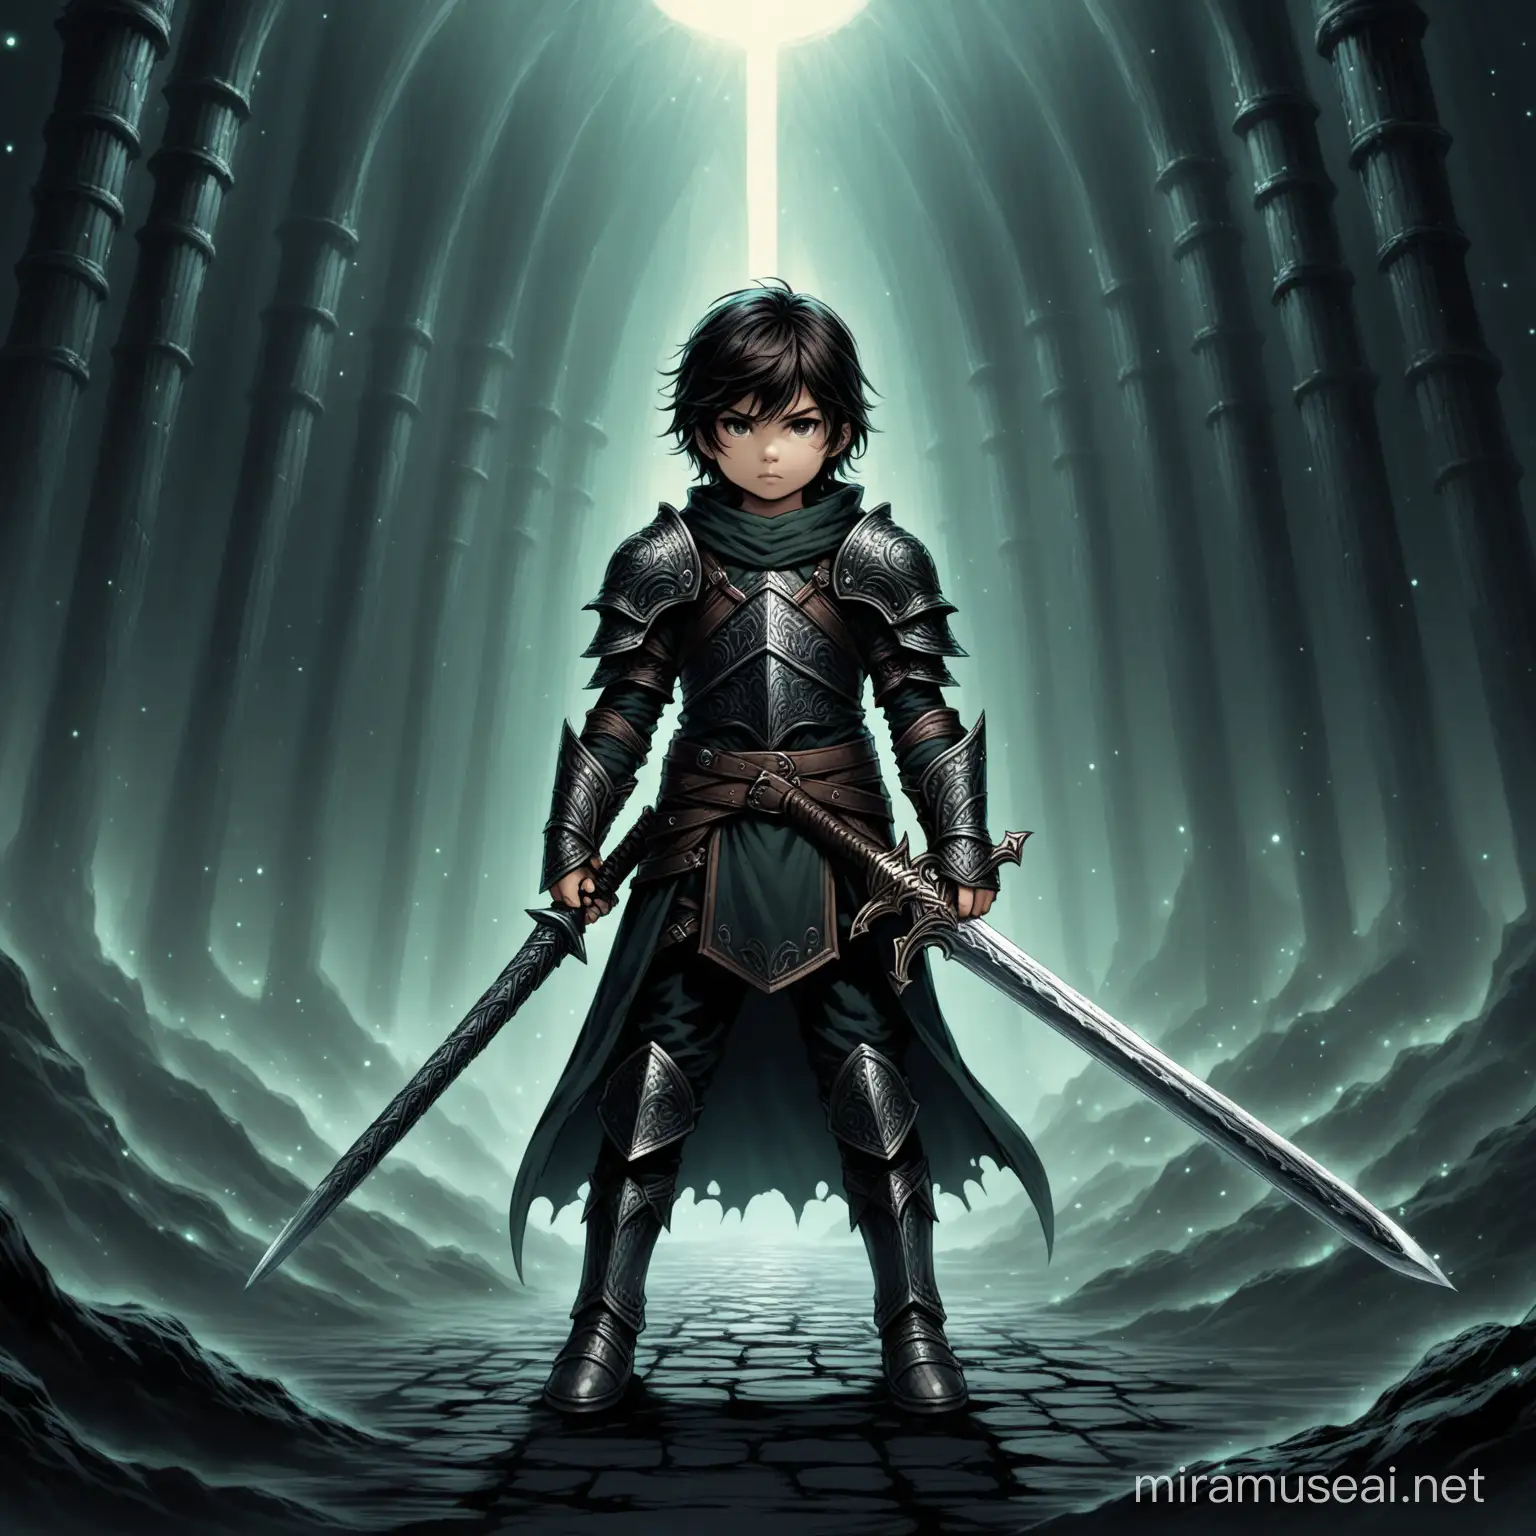 Dark Fantasy Warrior Very Young Swordsman in a Mysterious Realm